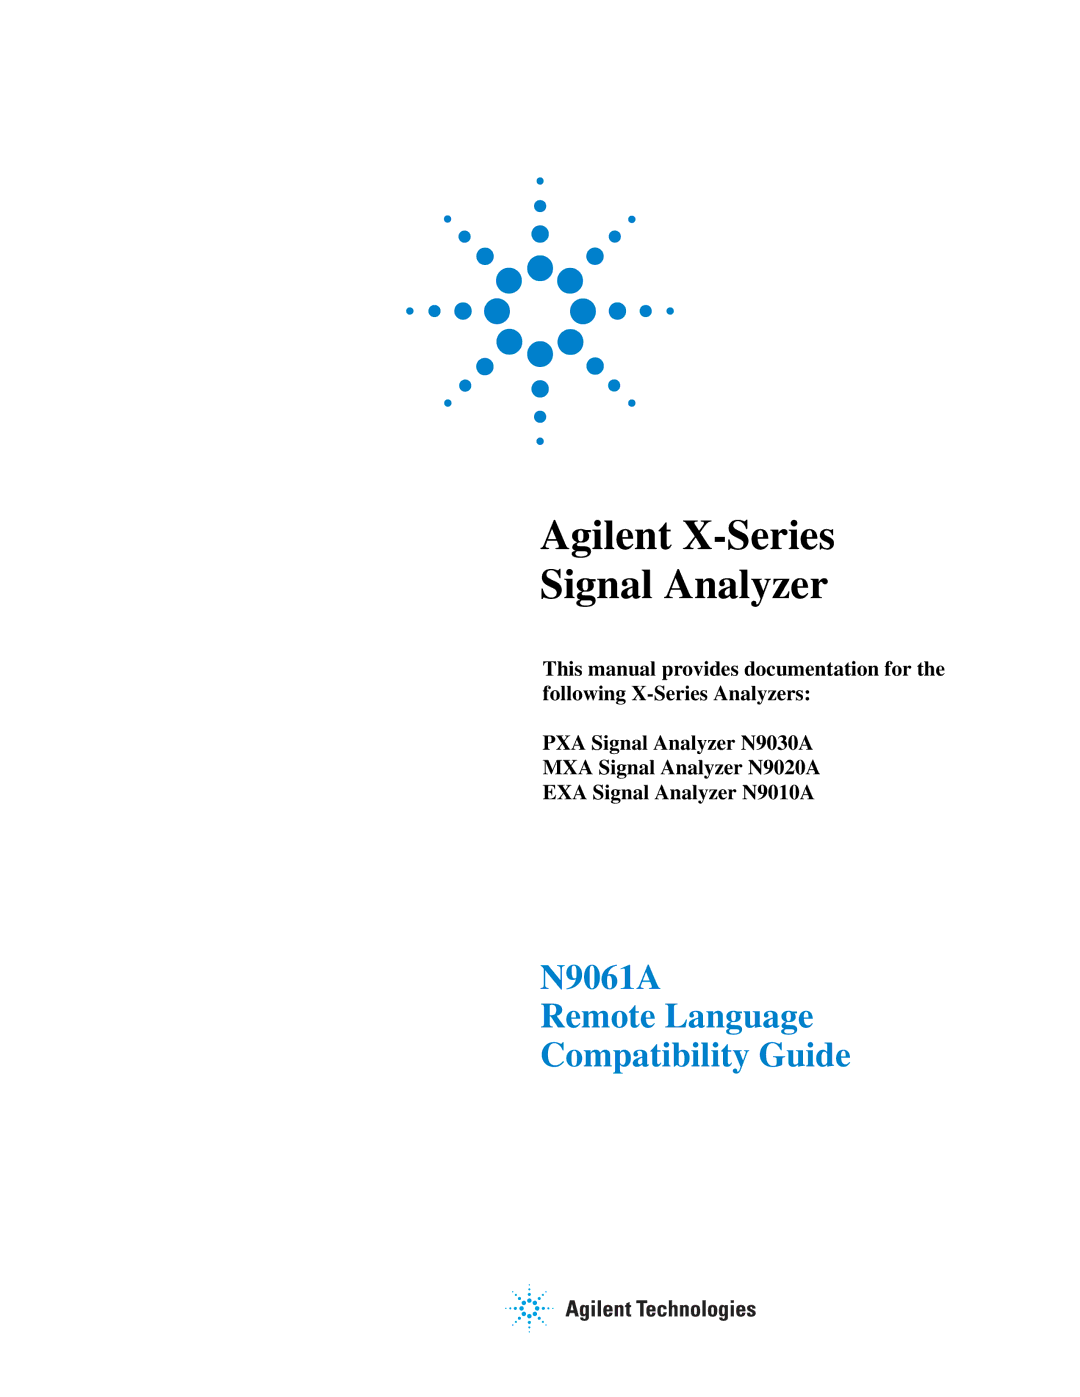 Agilent Technologies N9030a manual Agilent X-Series Signal Analyzer 